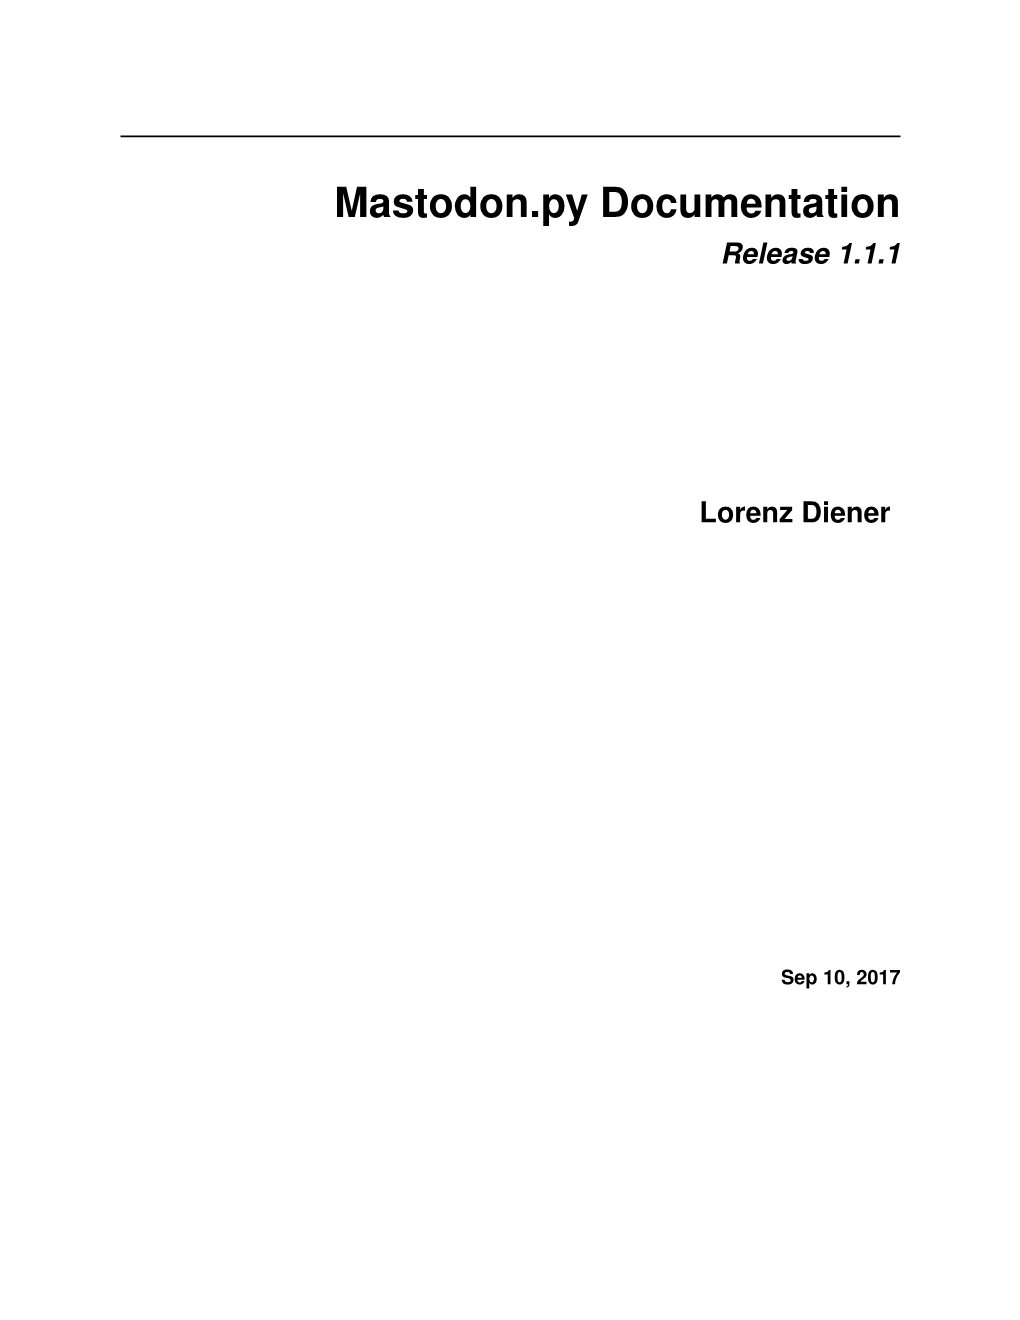 Mastodon.Py Documentation Release 1.1.1